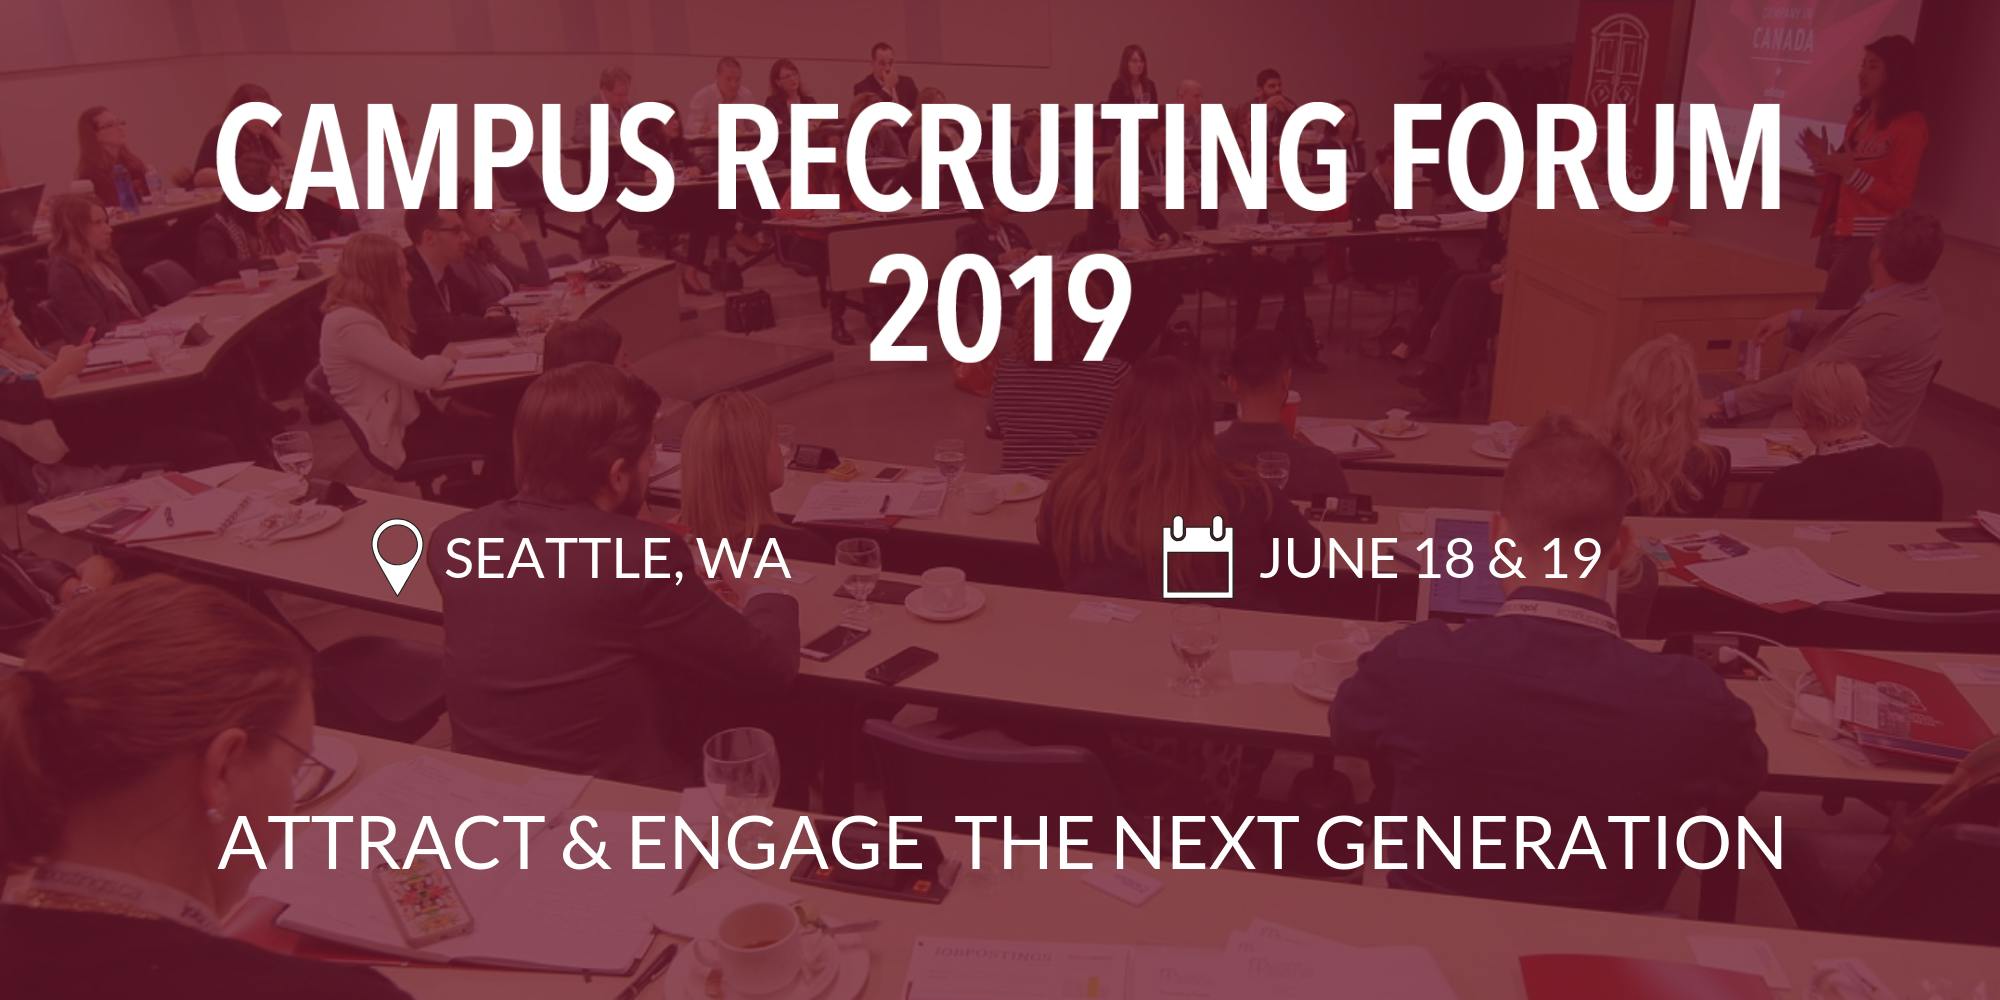 Campus Recruiting Forum 2019 - Seattle, WA